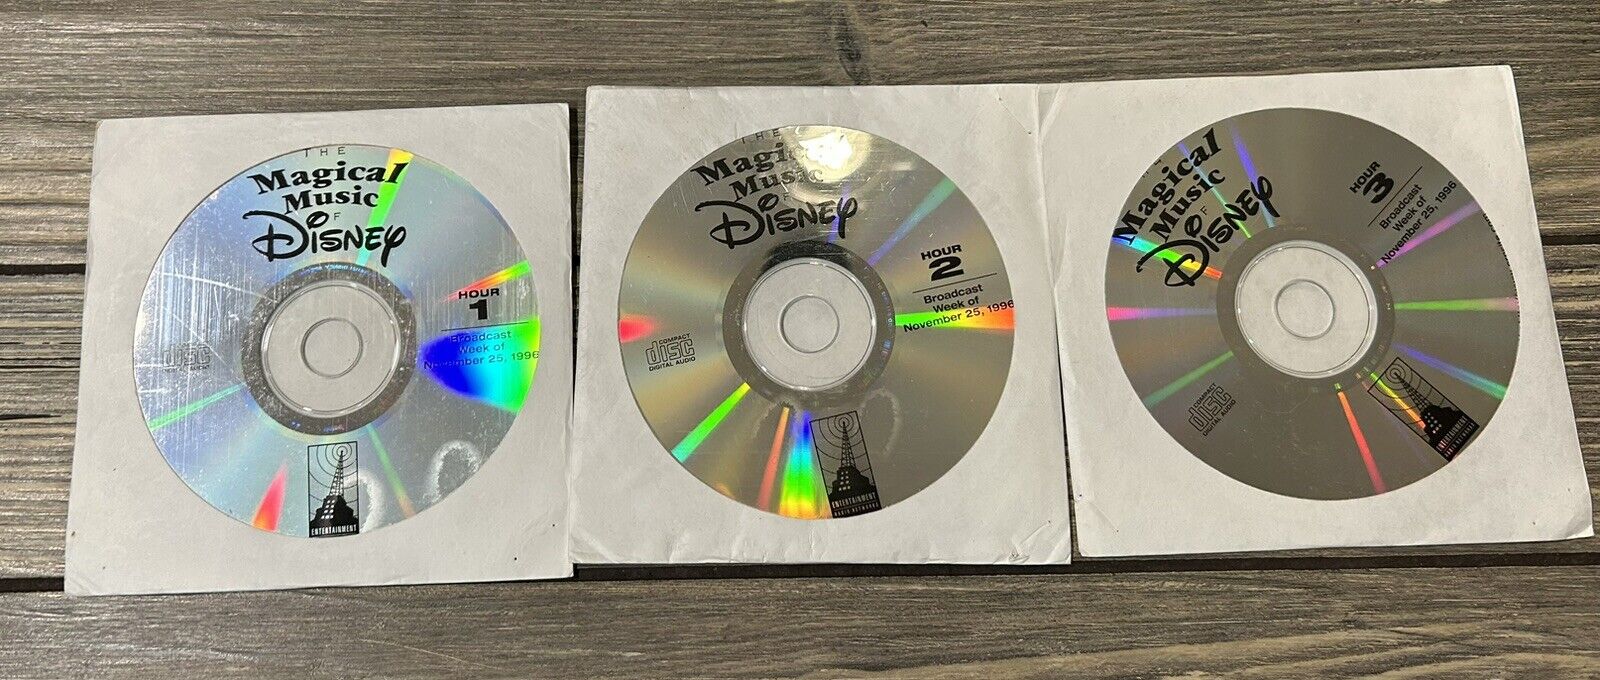 Vtg November 25 1996 The Magical Music of Disney Set 3 CDs Radio Show 